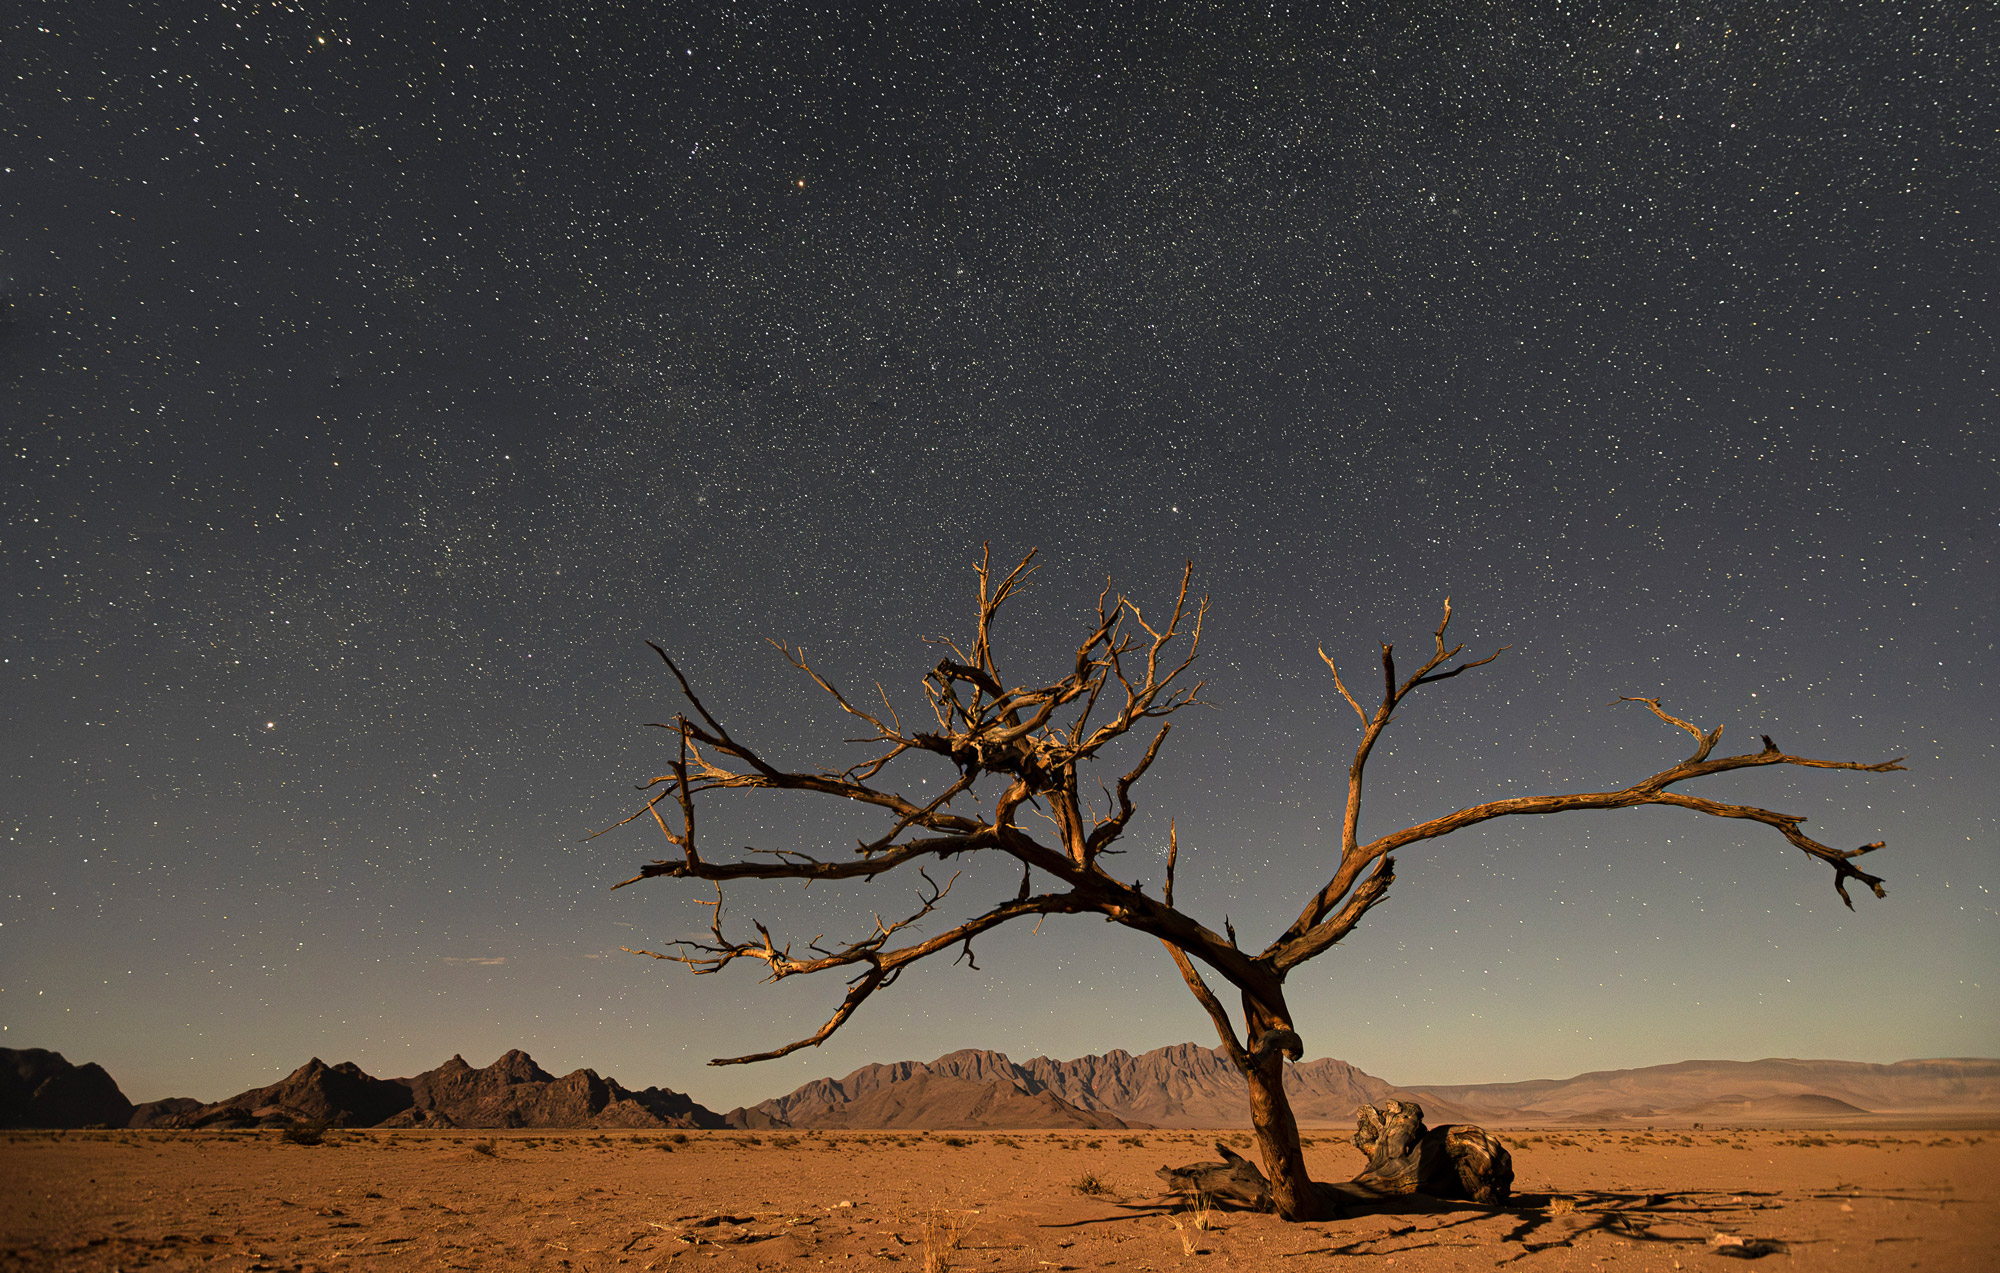 Starry sky over a desert landscape, barren tree in foreground